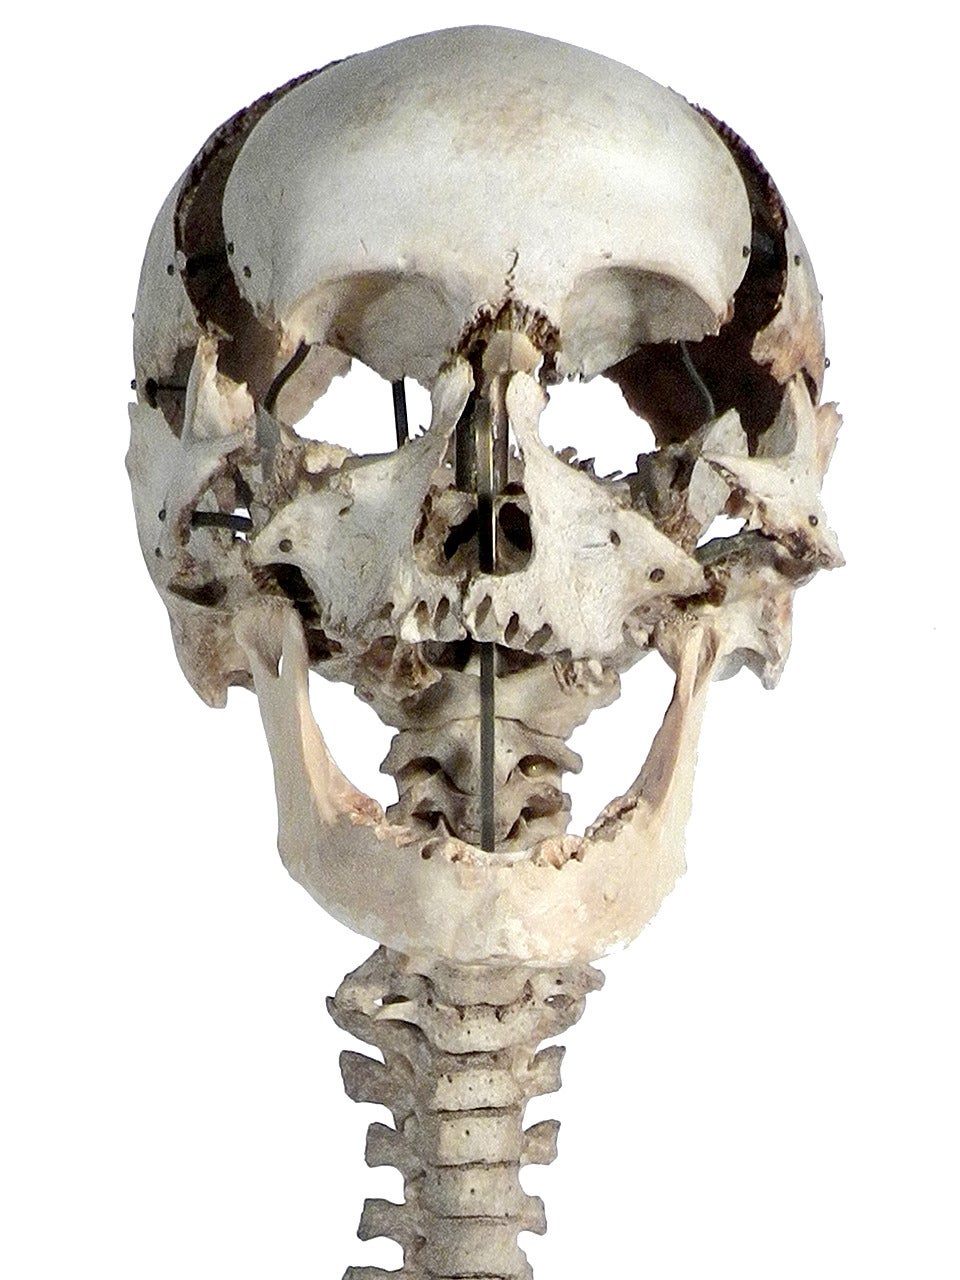 spine and skull